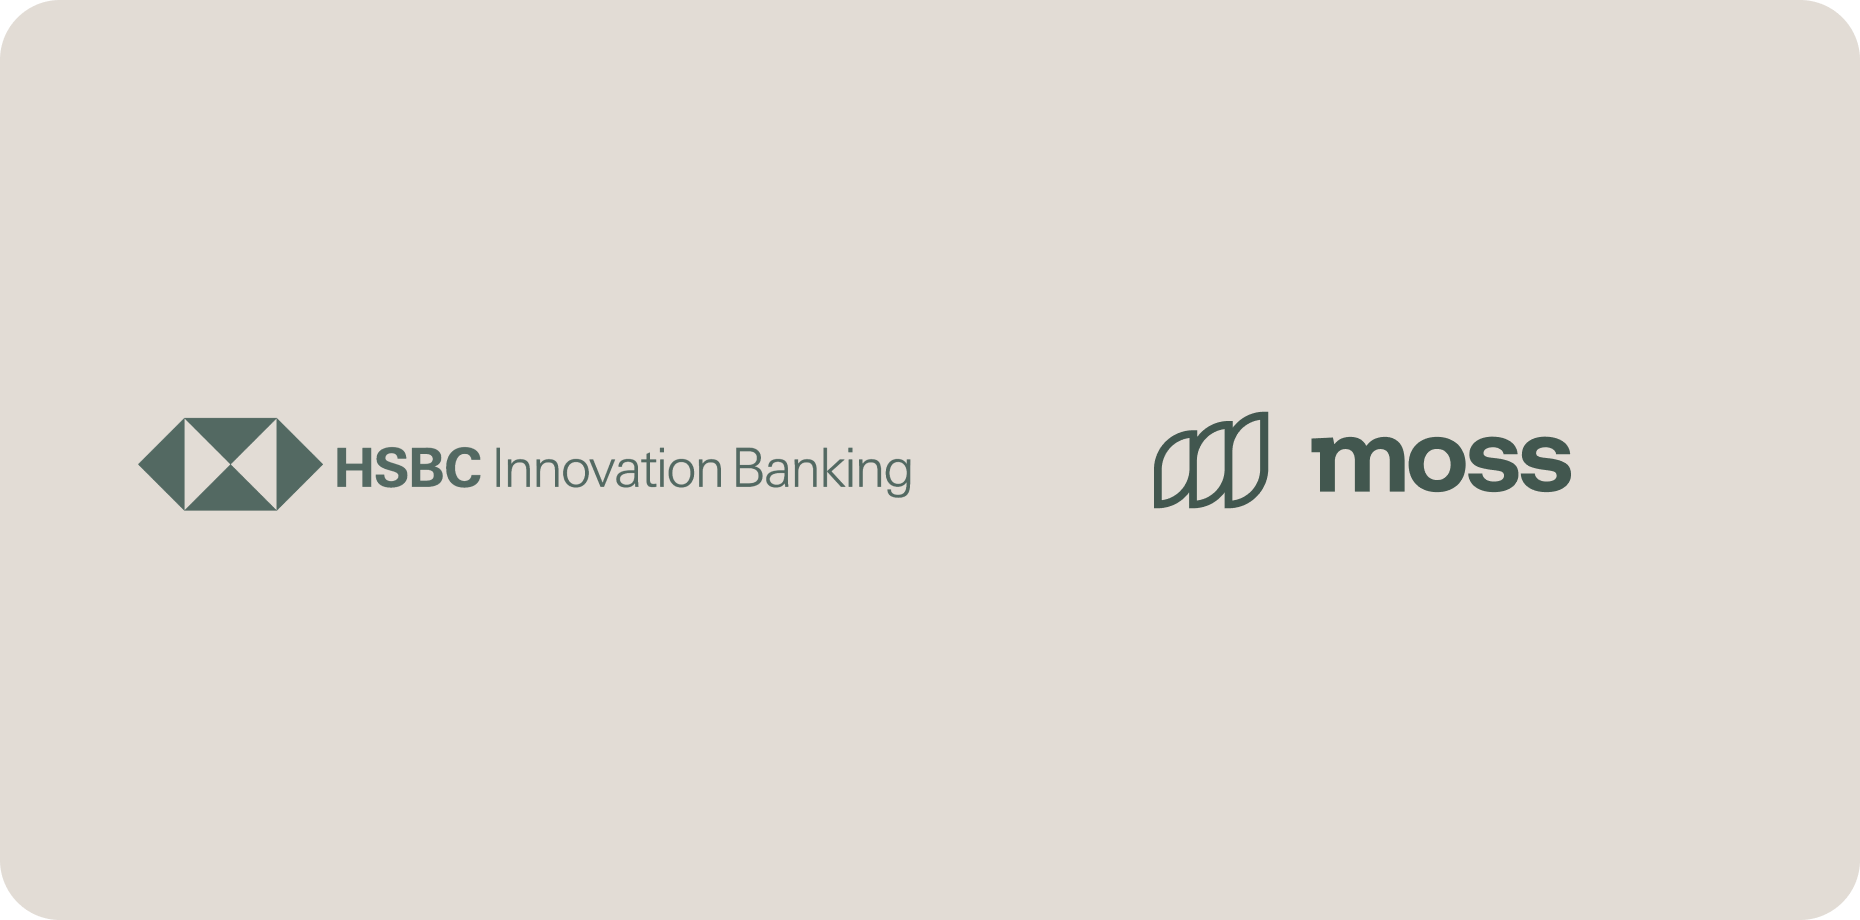 HSBC Innovation Banking en Moss logos